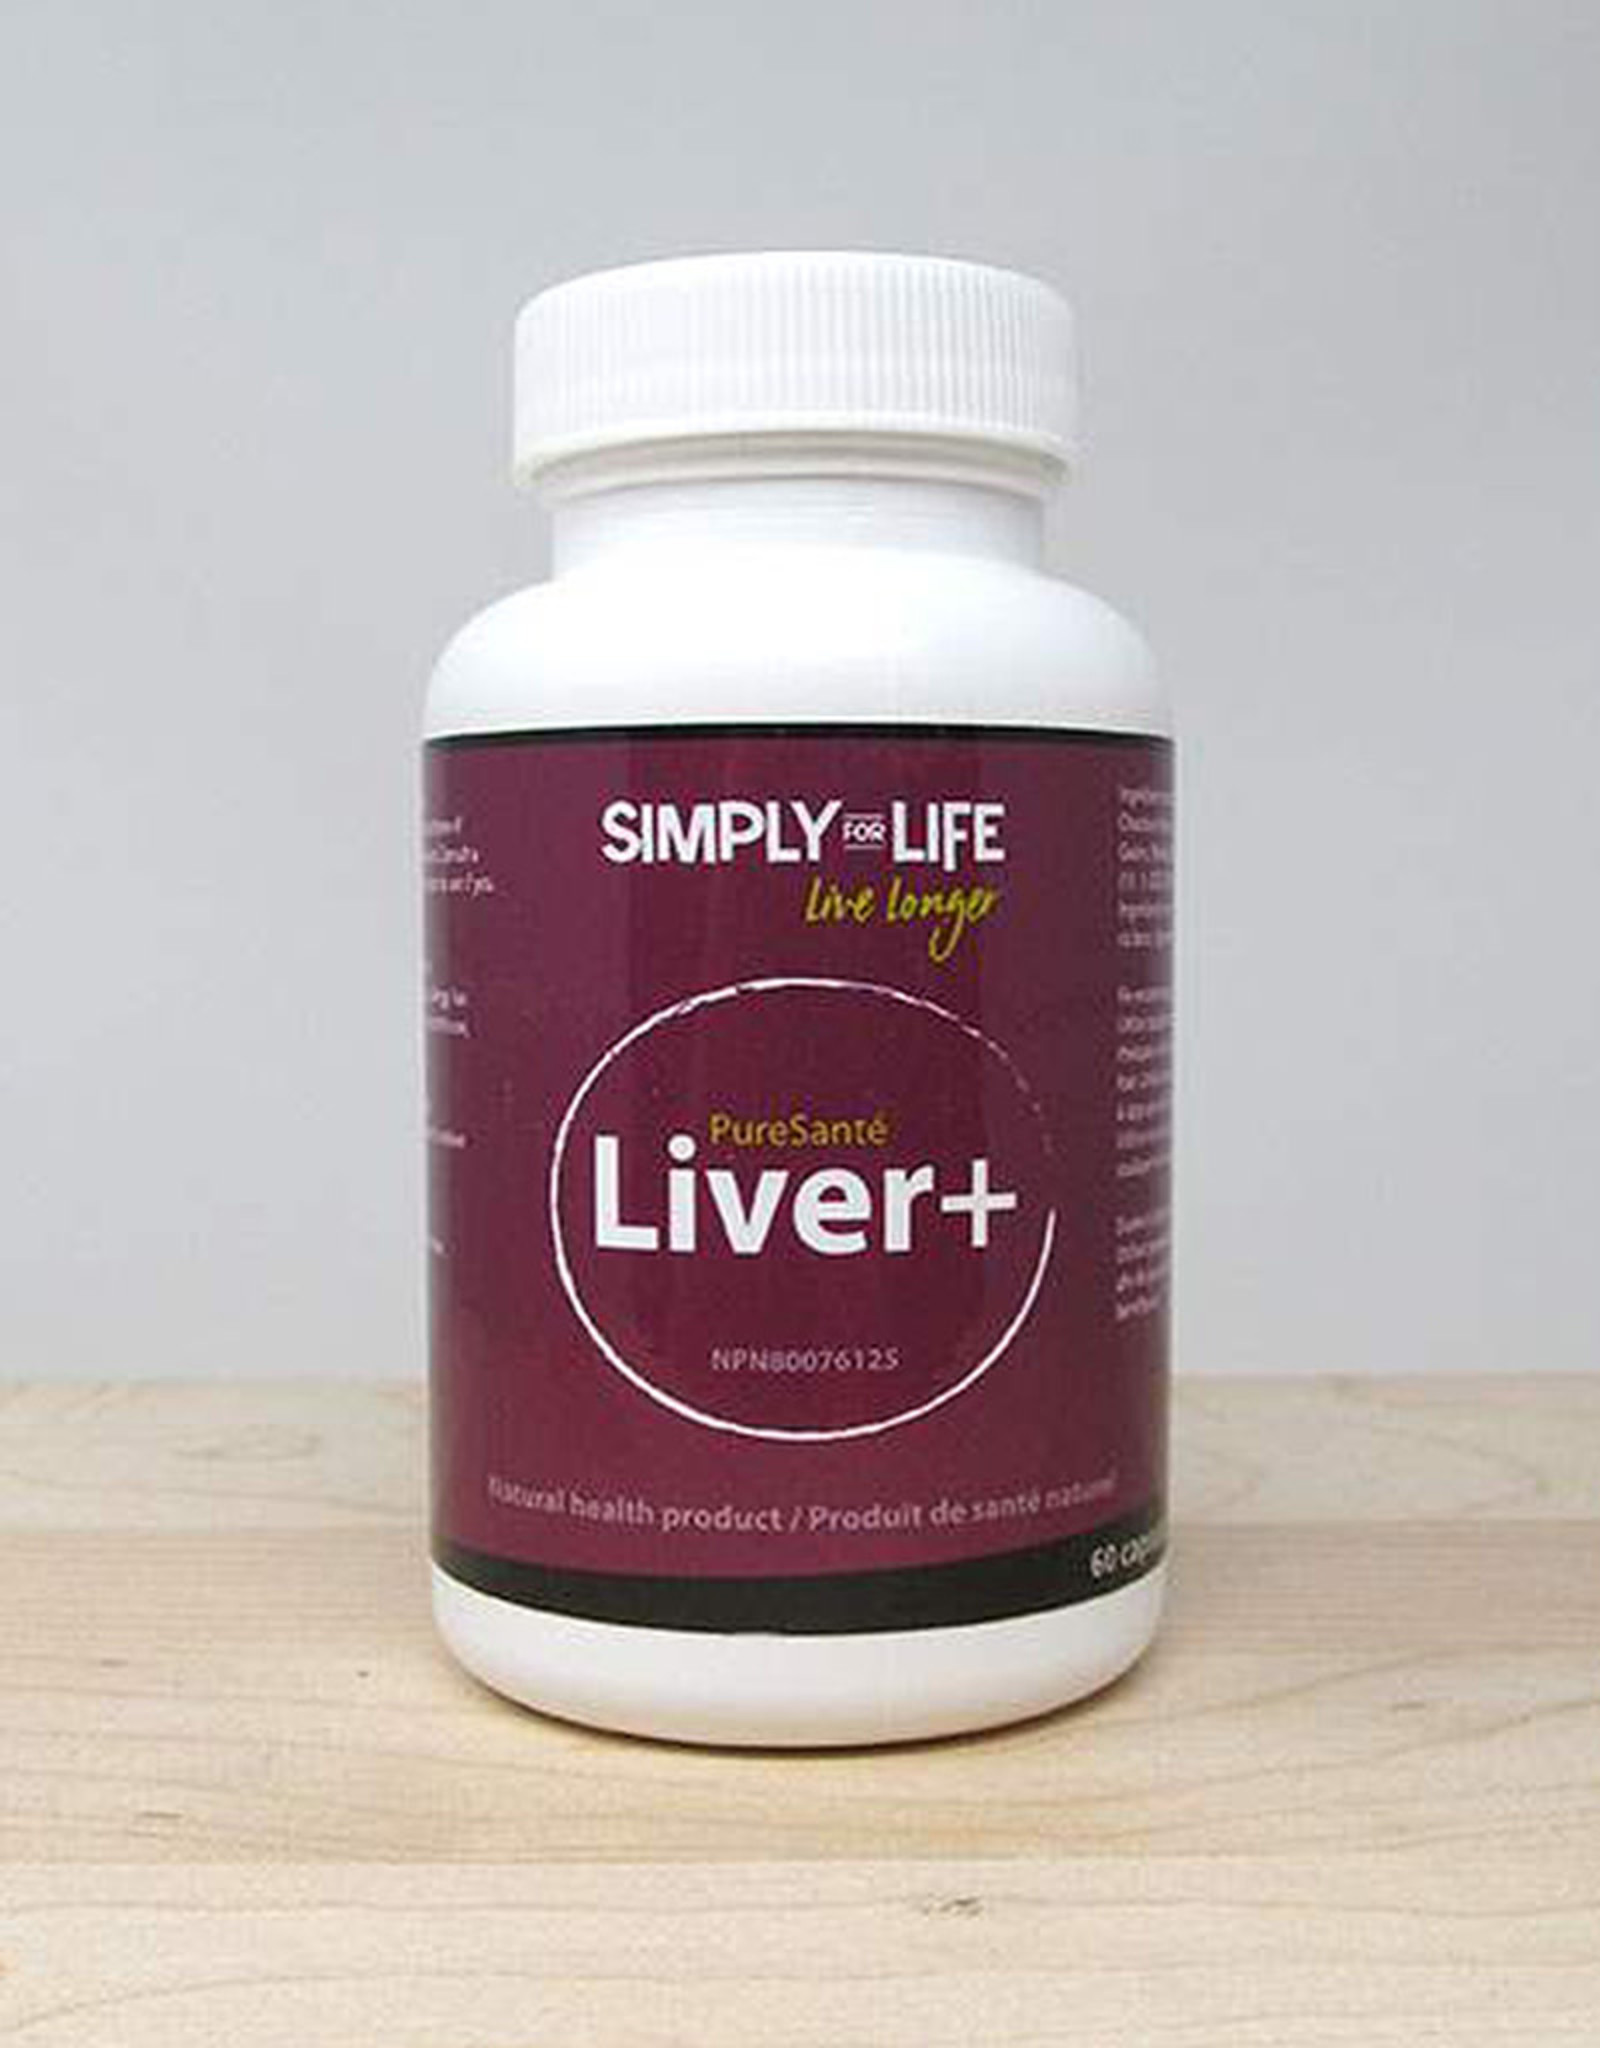 Simply For Life Simply For Life - Liver+ (60cap)